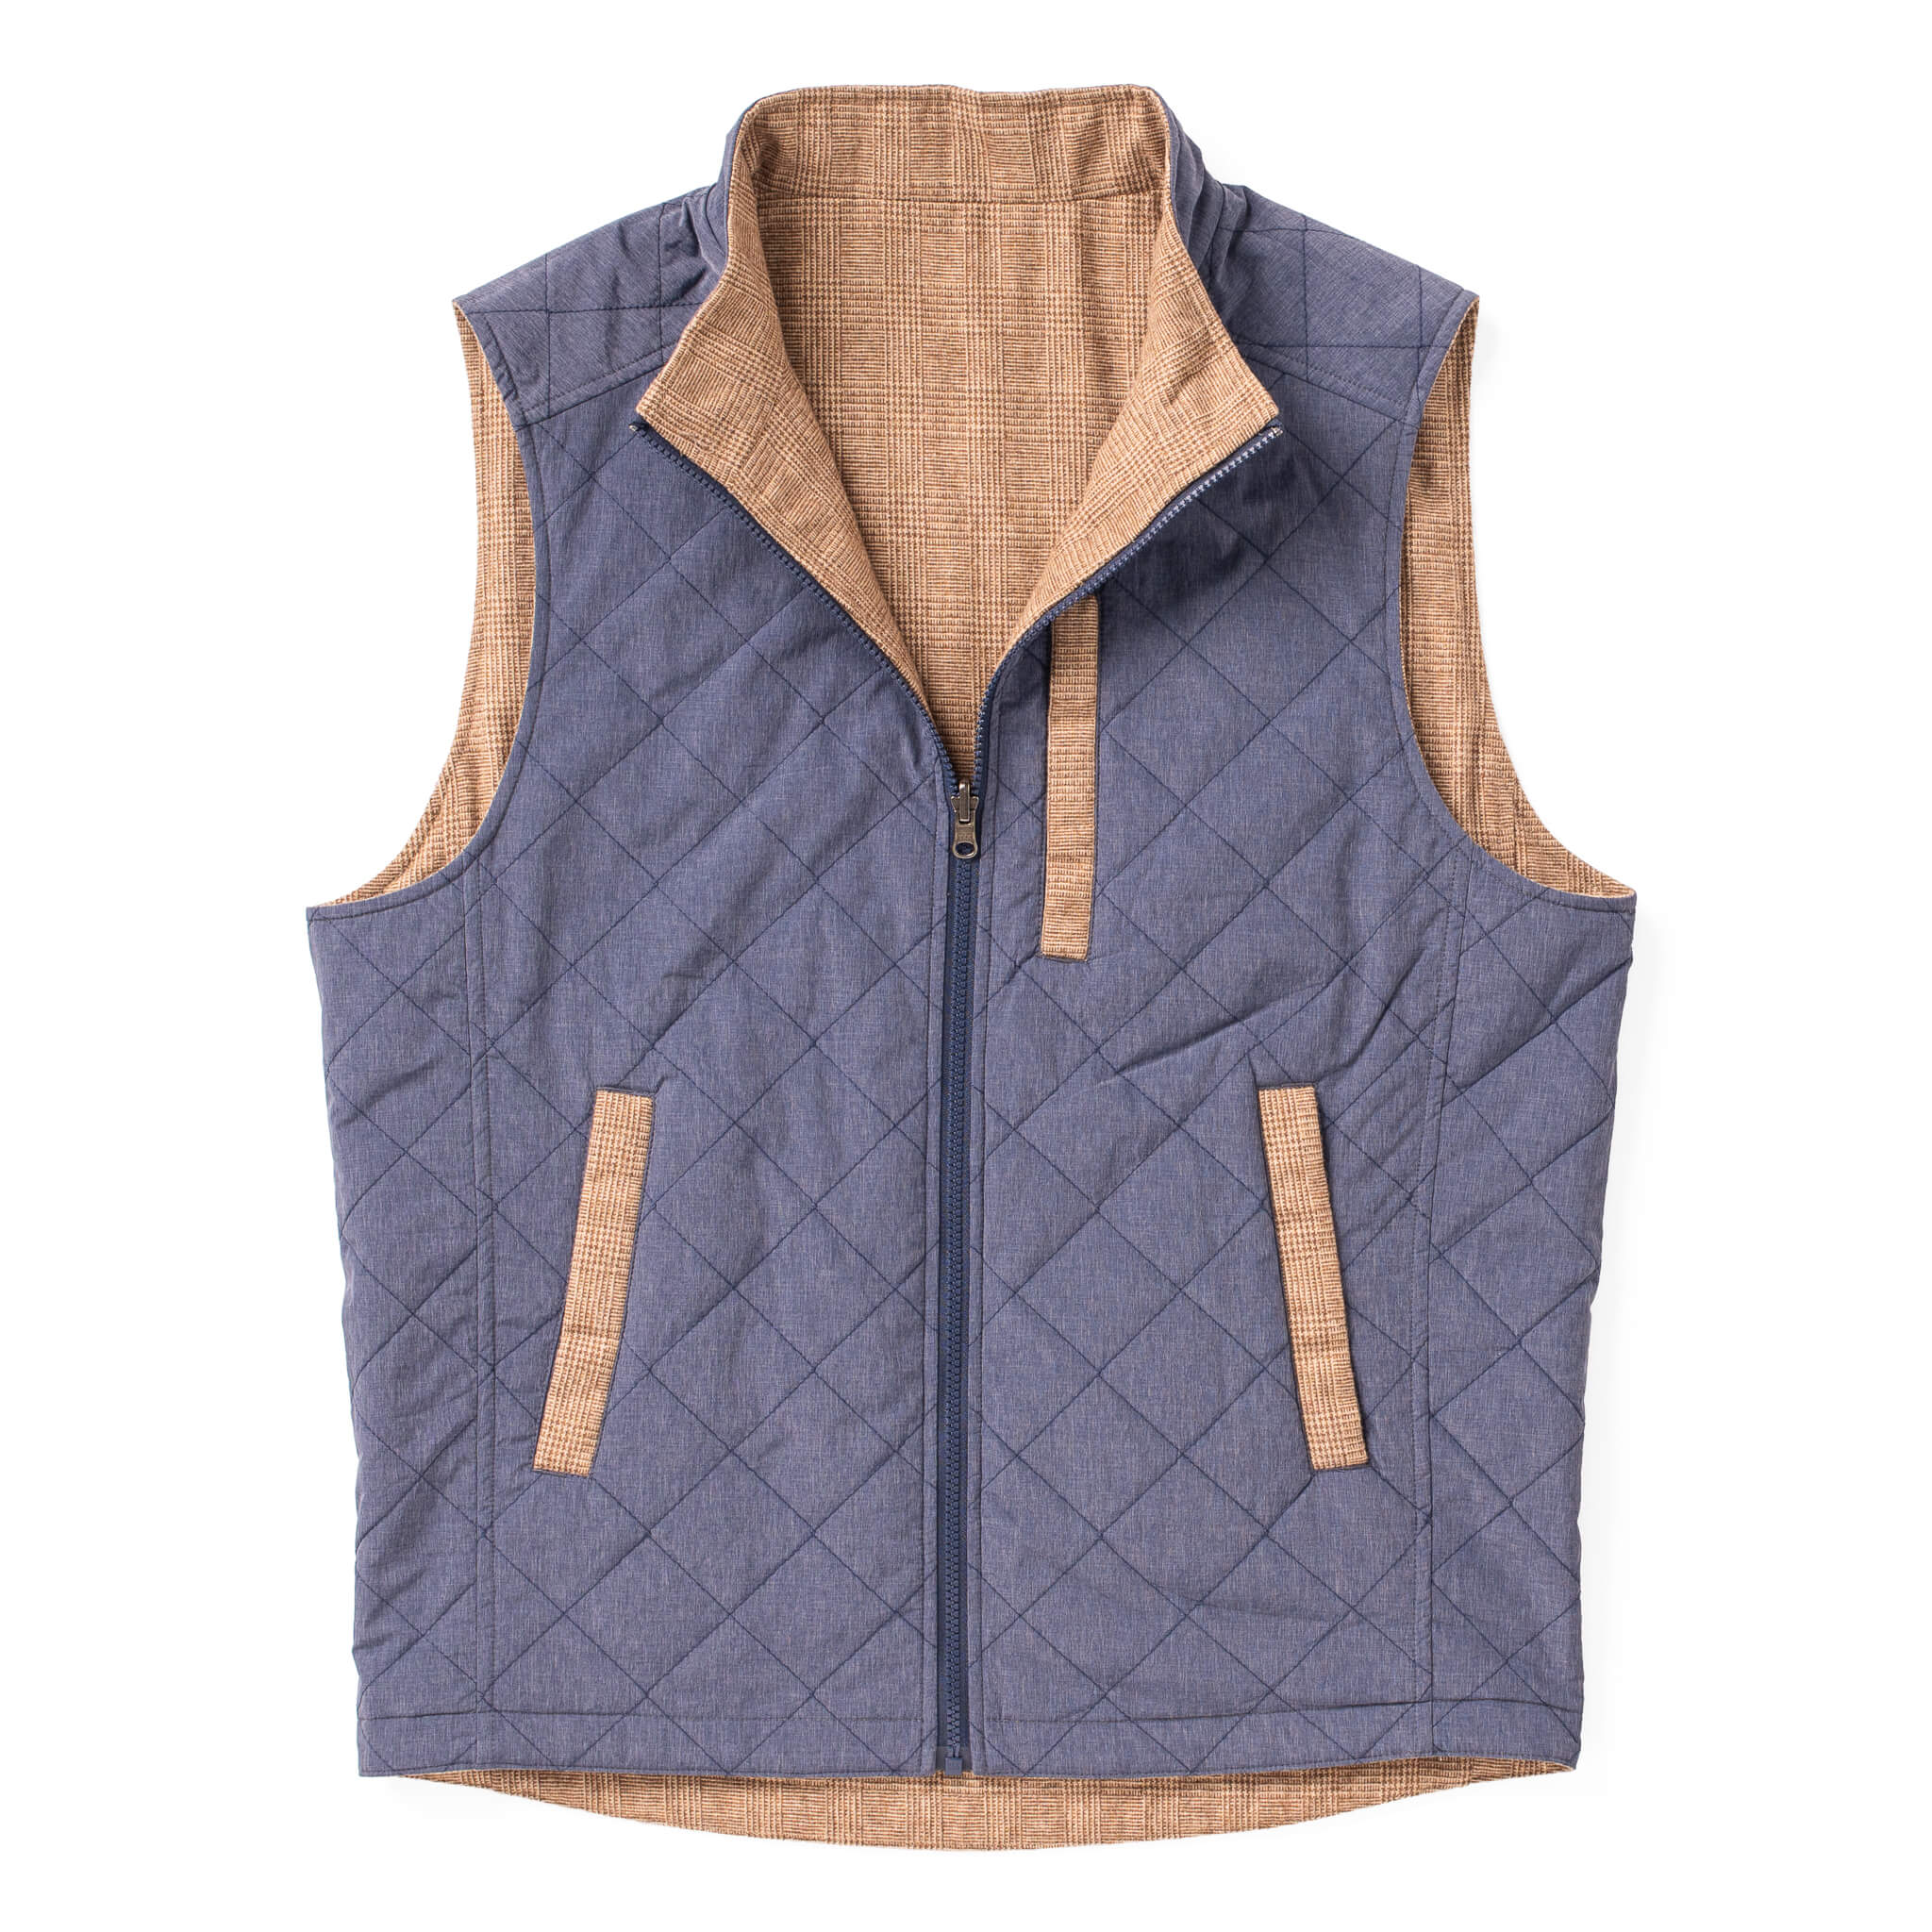 Sautee Nylon u0026 Wool Reversible Vest - Madison Creek Outfitters